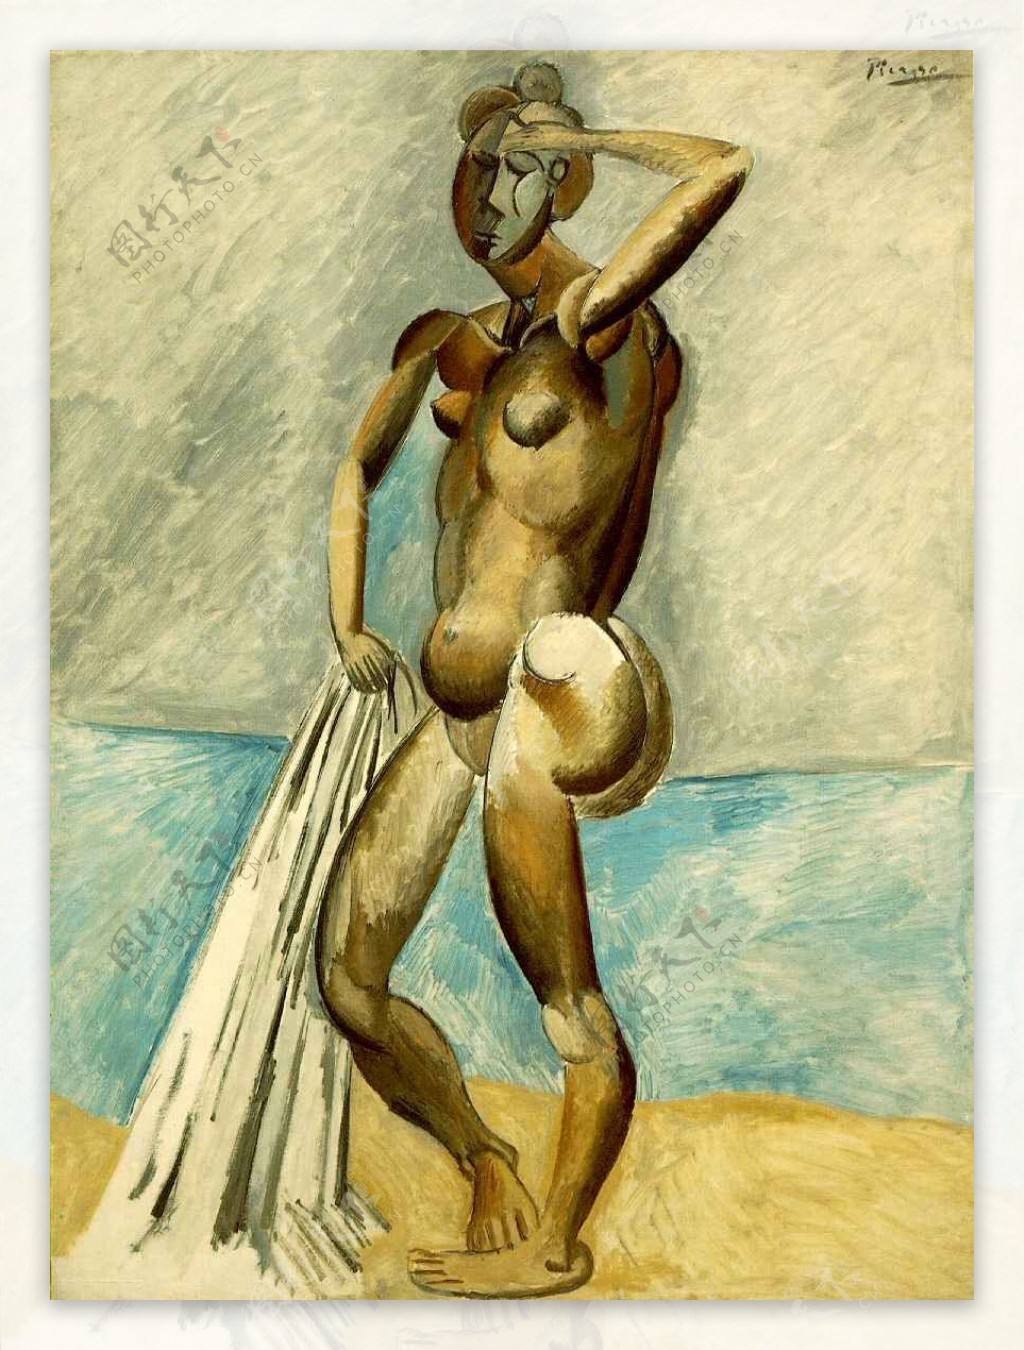 1908FemmenueauborddelamerBaigneuse西班牙画家巴勃罗毕加索抽象油画人物人体油画装饰画